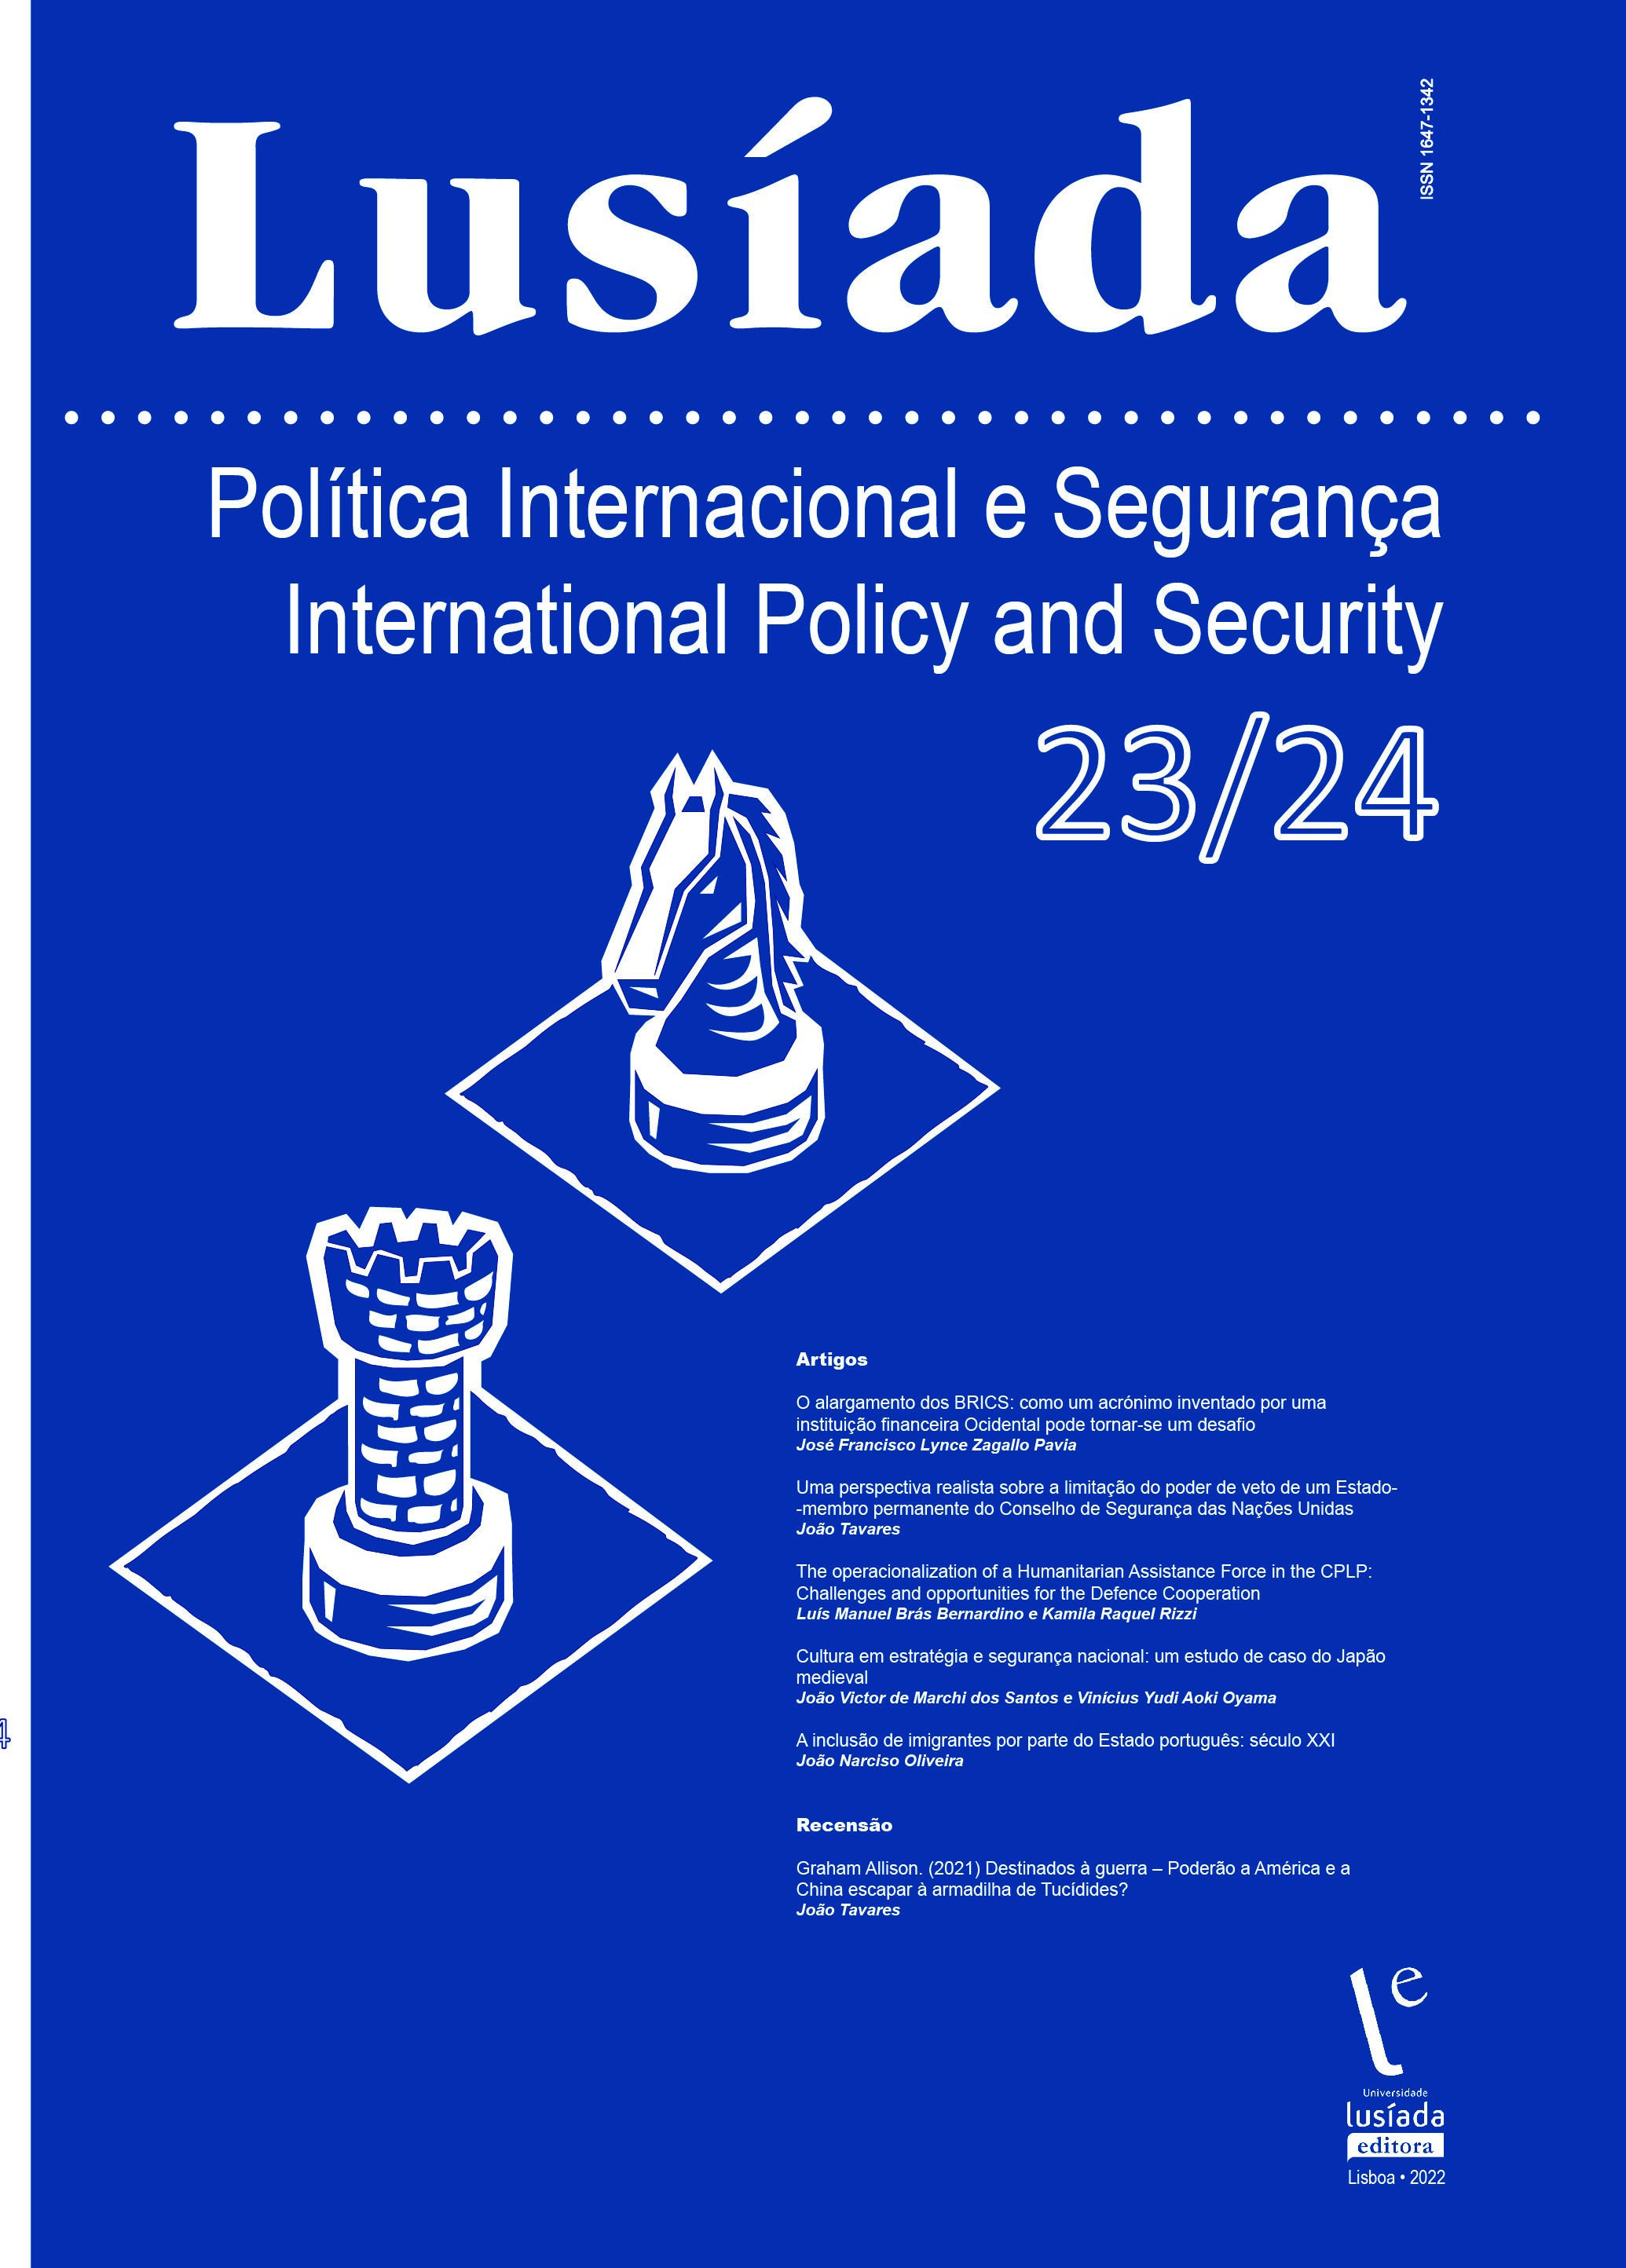 Lusíada. Política Internacional e Segurança, n. 23-24 (2022) - Universidade Lusíada Editora